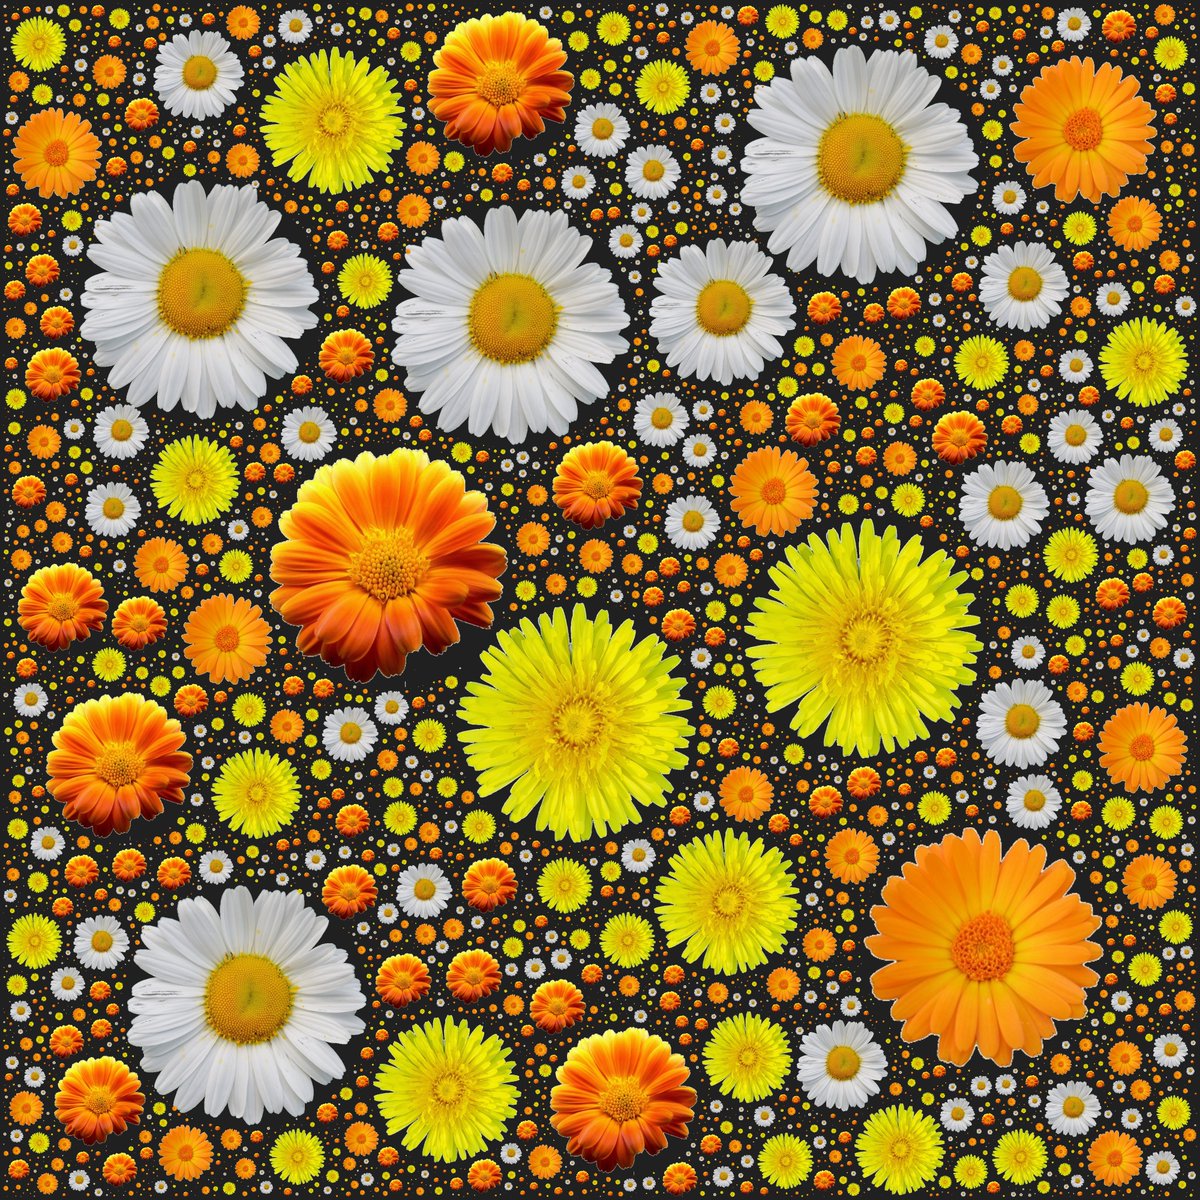 #circlepacking #circlepack #flowers #dandelion #daisy #orangeart #yellowart #whiteart #blackart using #goldenratio #javascript #GIMP #photos #generative #procedural